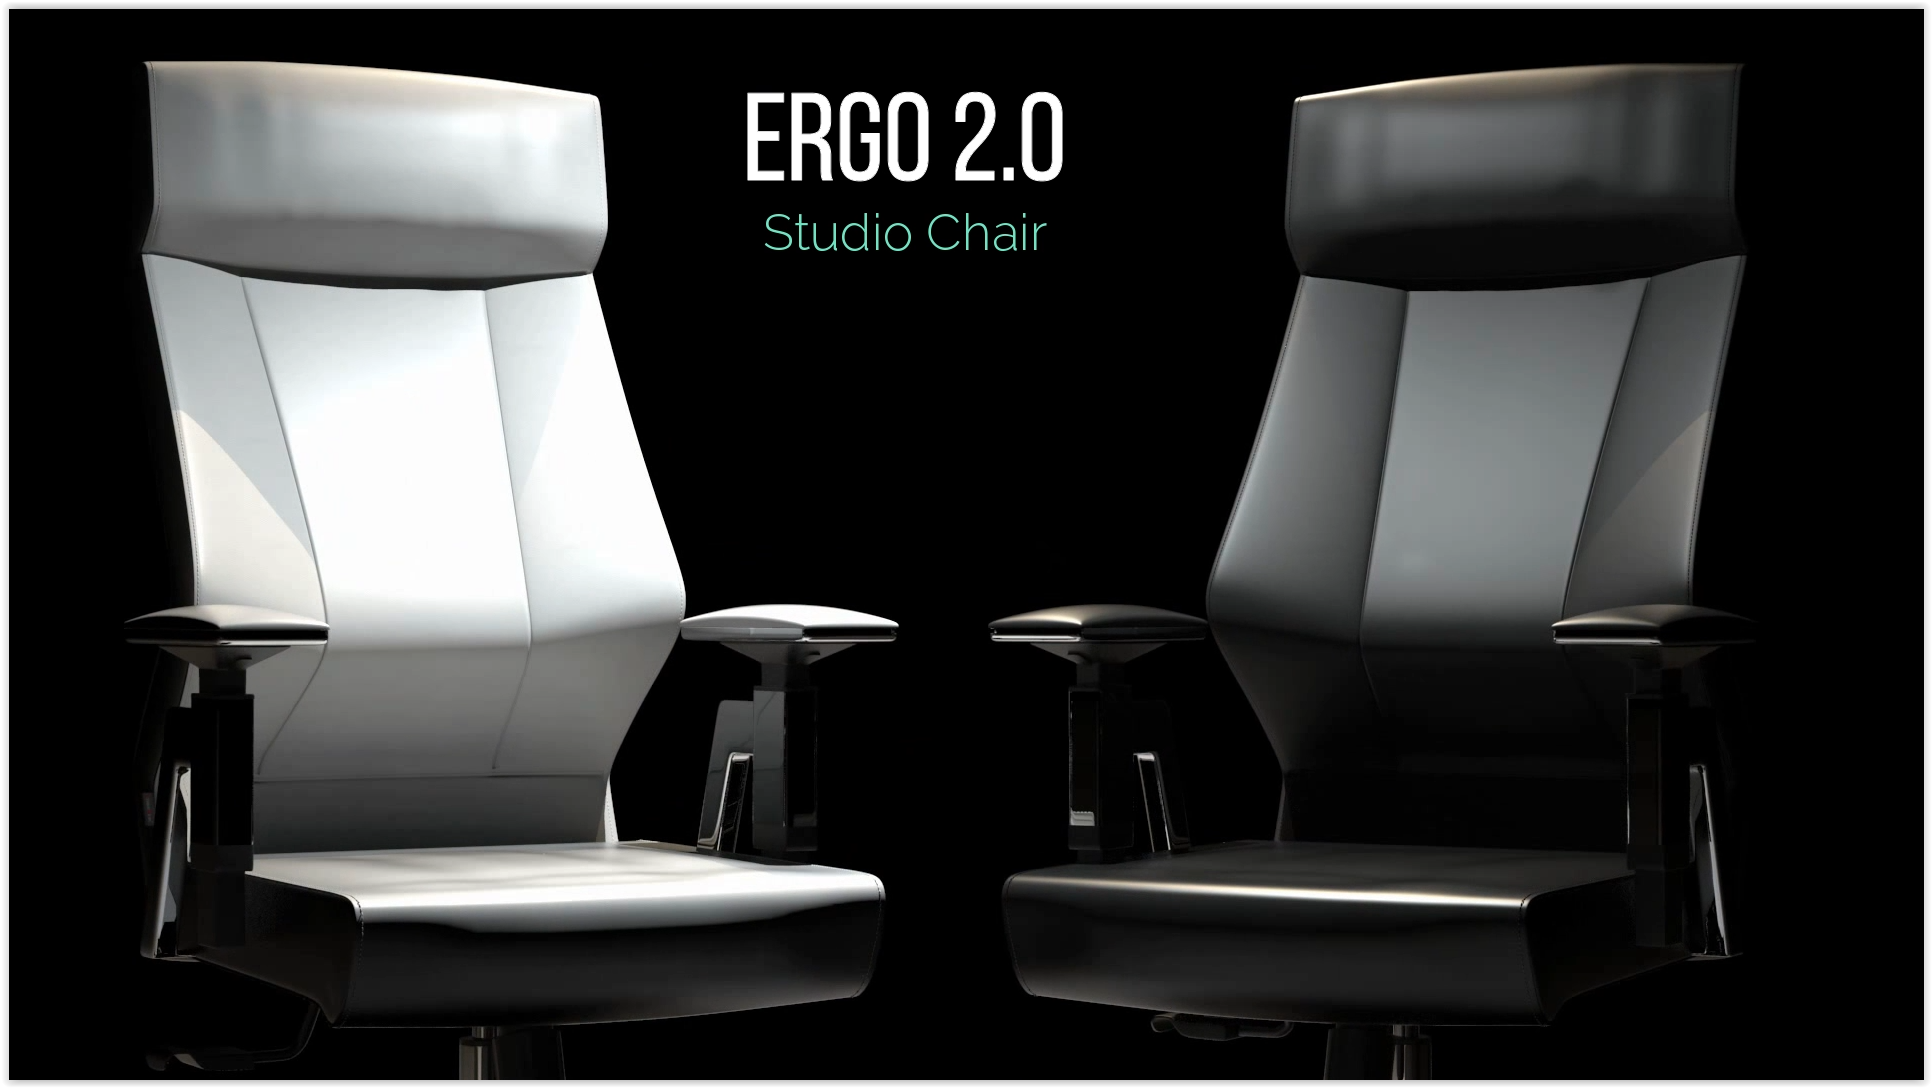 StudioDesk Ergo 2.0 Studio Chair